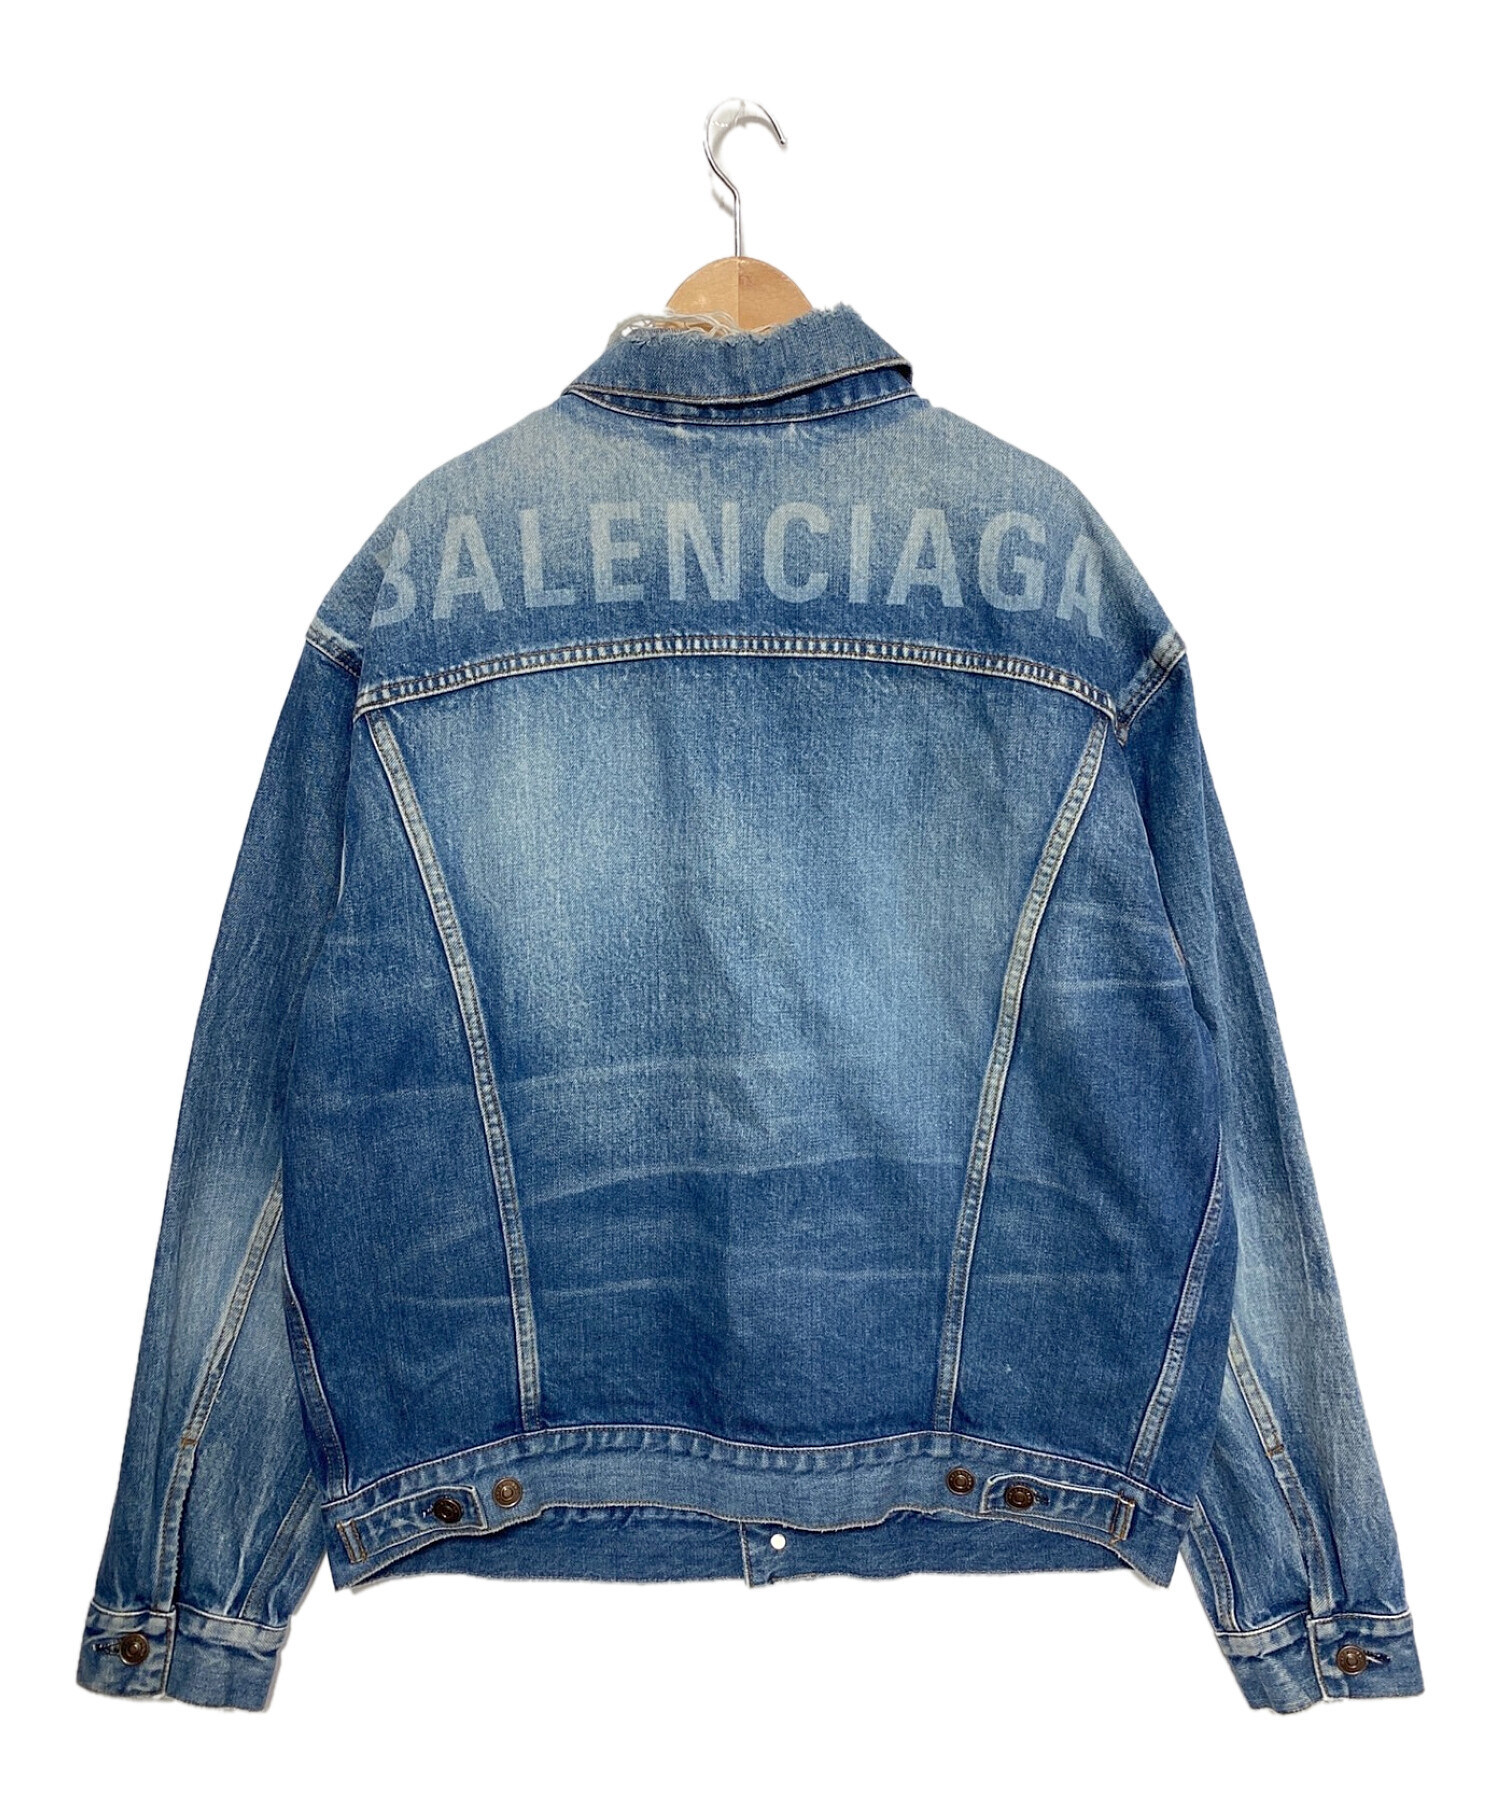 Balenciagaデニムジャケット 美品 サイズ34 - Gジャン/デニムジャケット